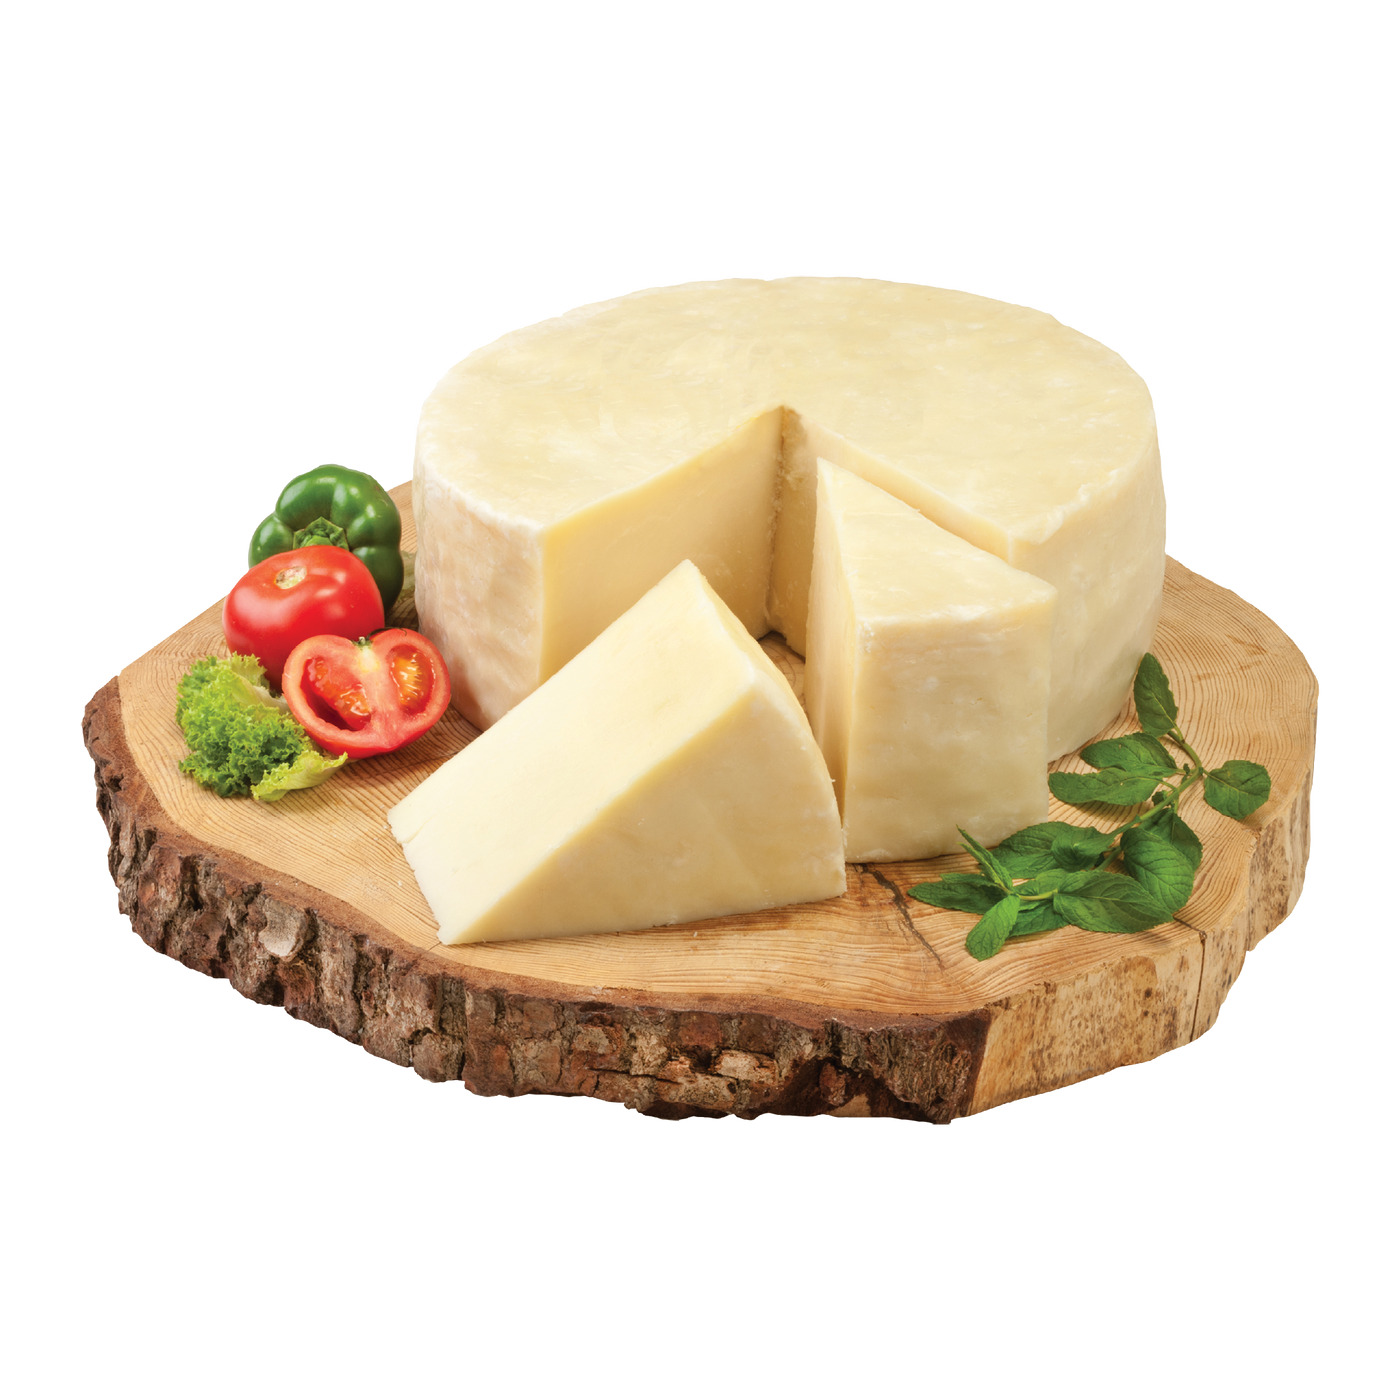 Sheep & Goat's Milk Cheese (Kefalograviera)